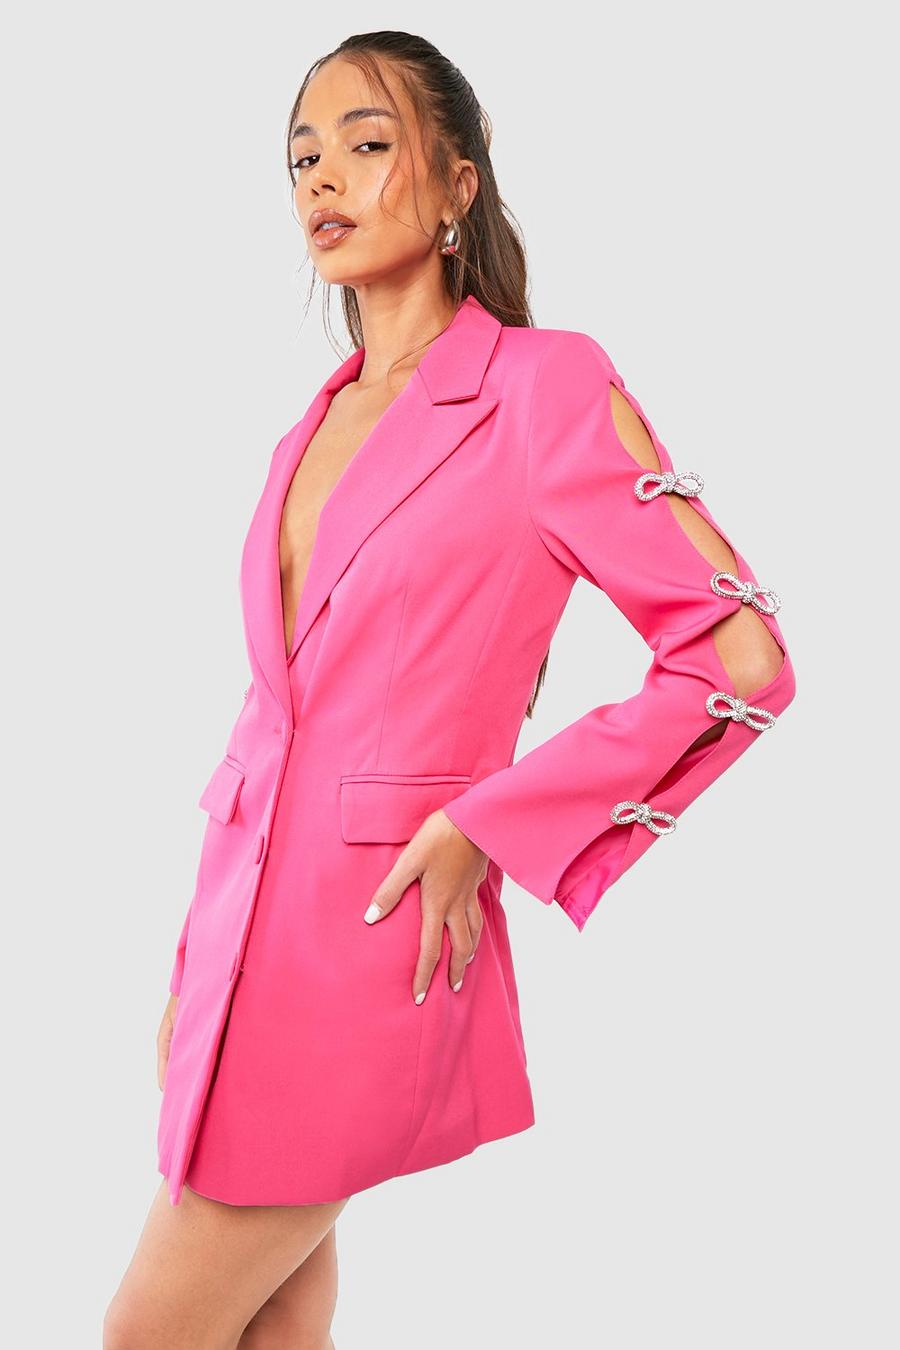 Pink rose Premium Diamante Bow Detail Fitted Blazer Dress